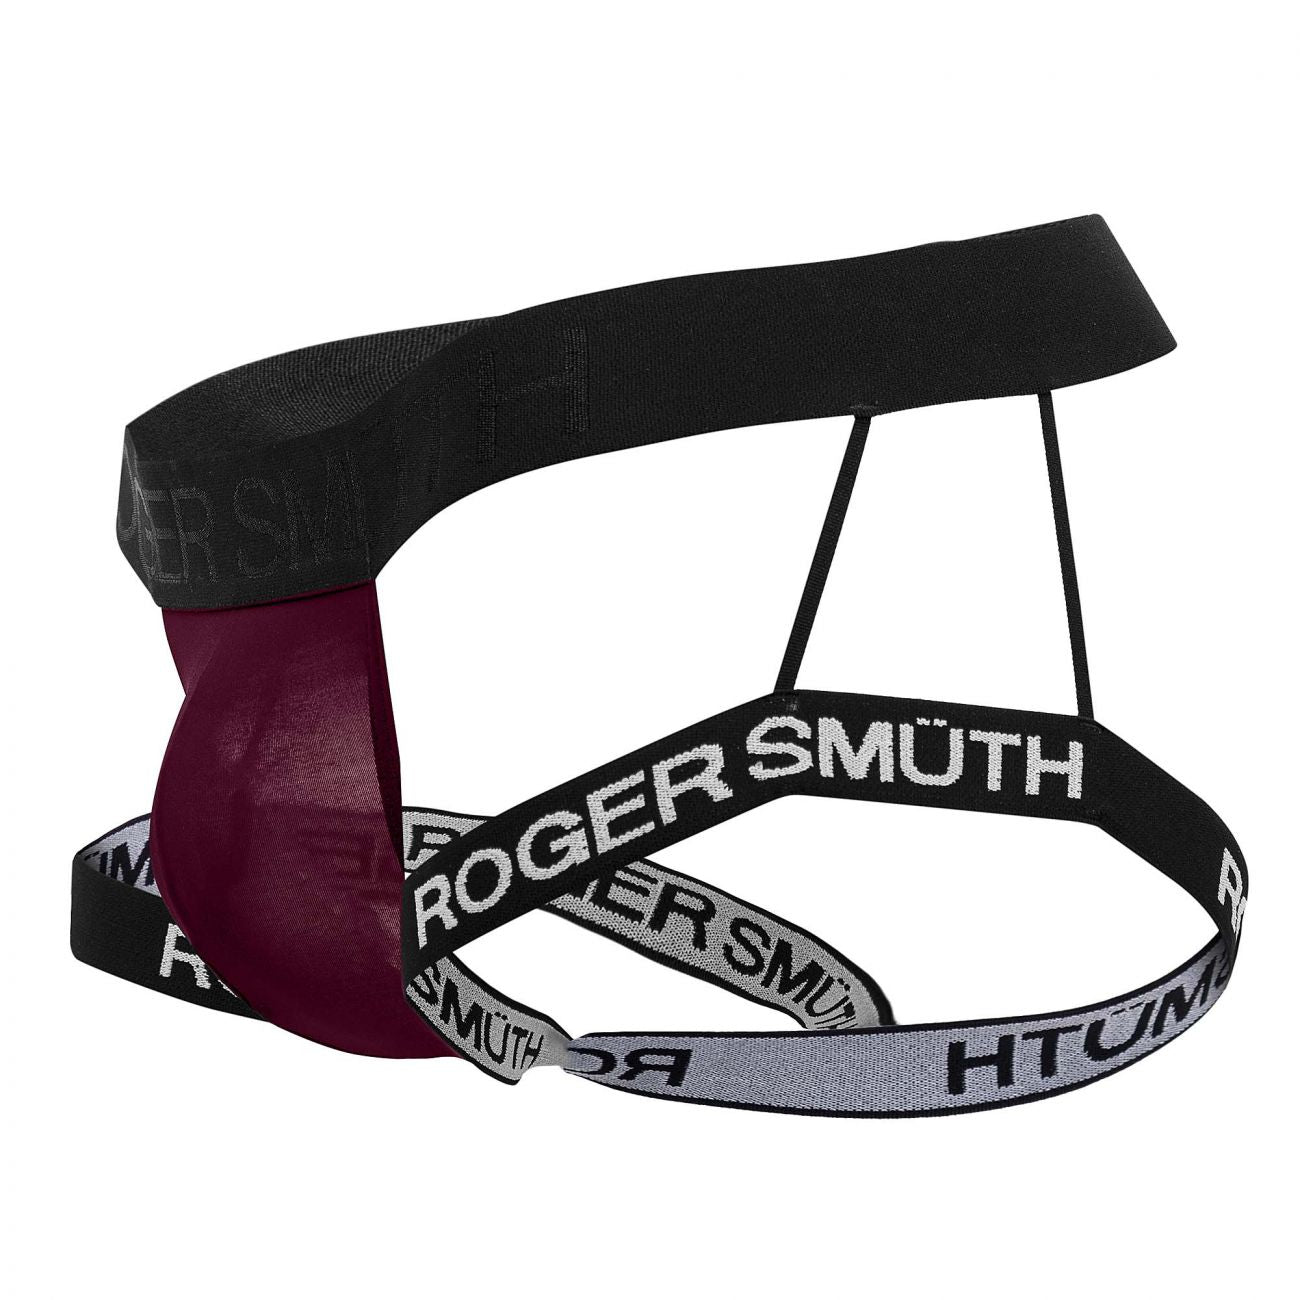 Roger Smuth RS013 Jockstrap